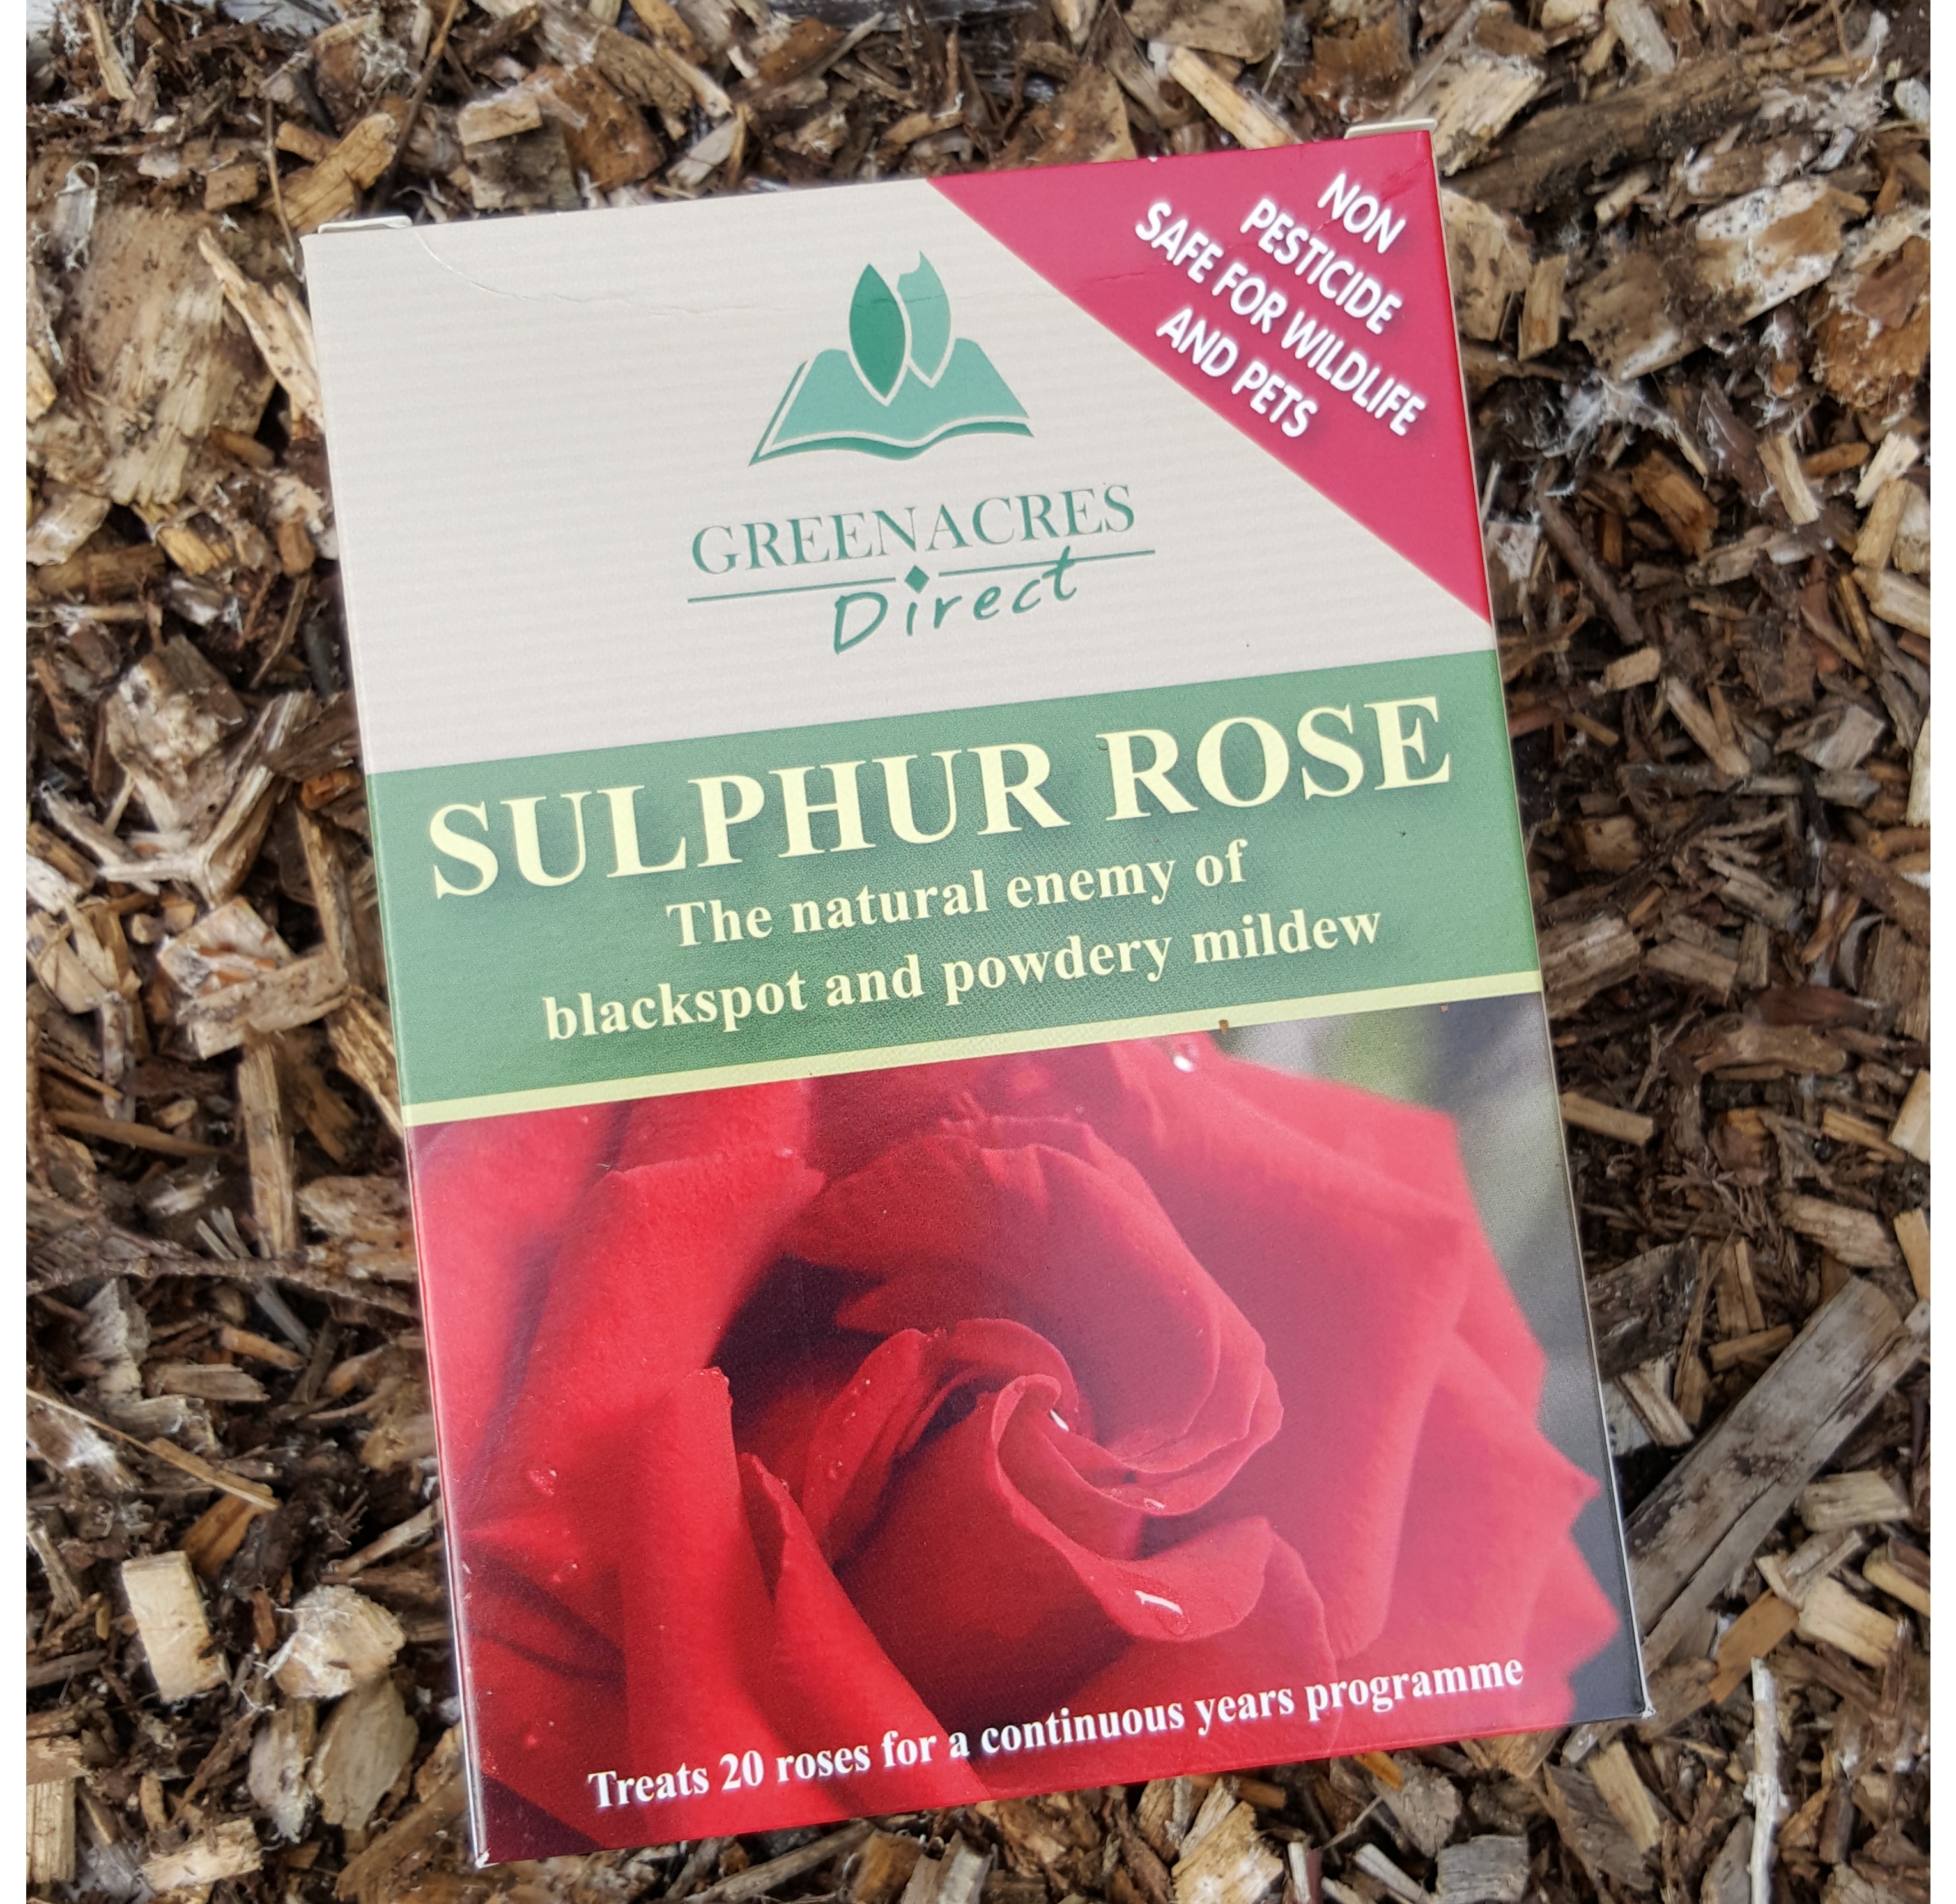 1kg box of sulphur rose feed